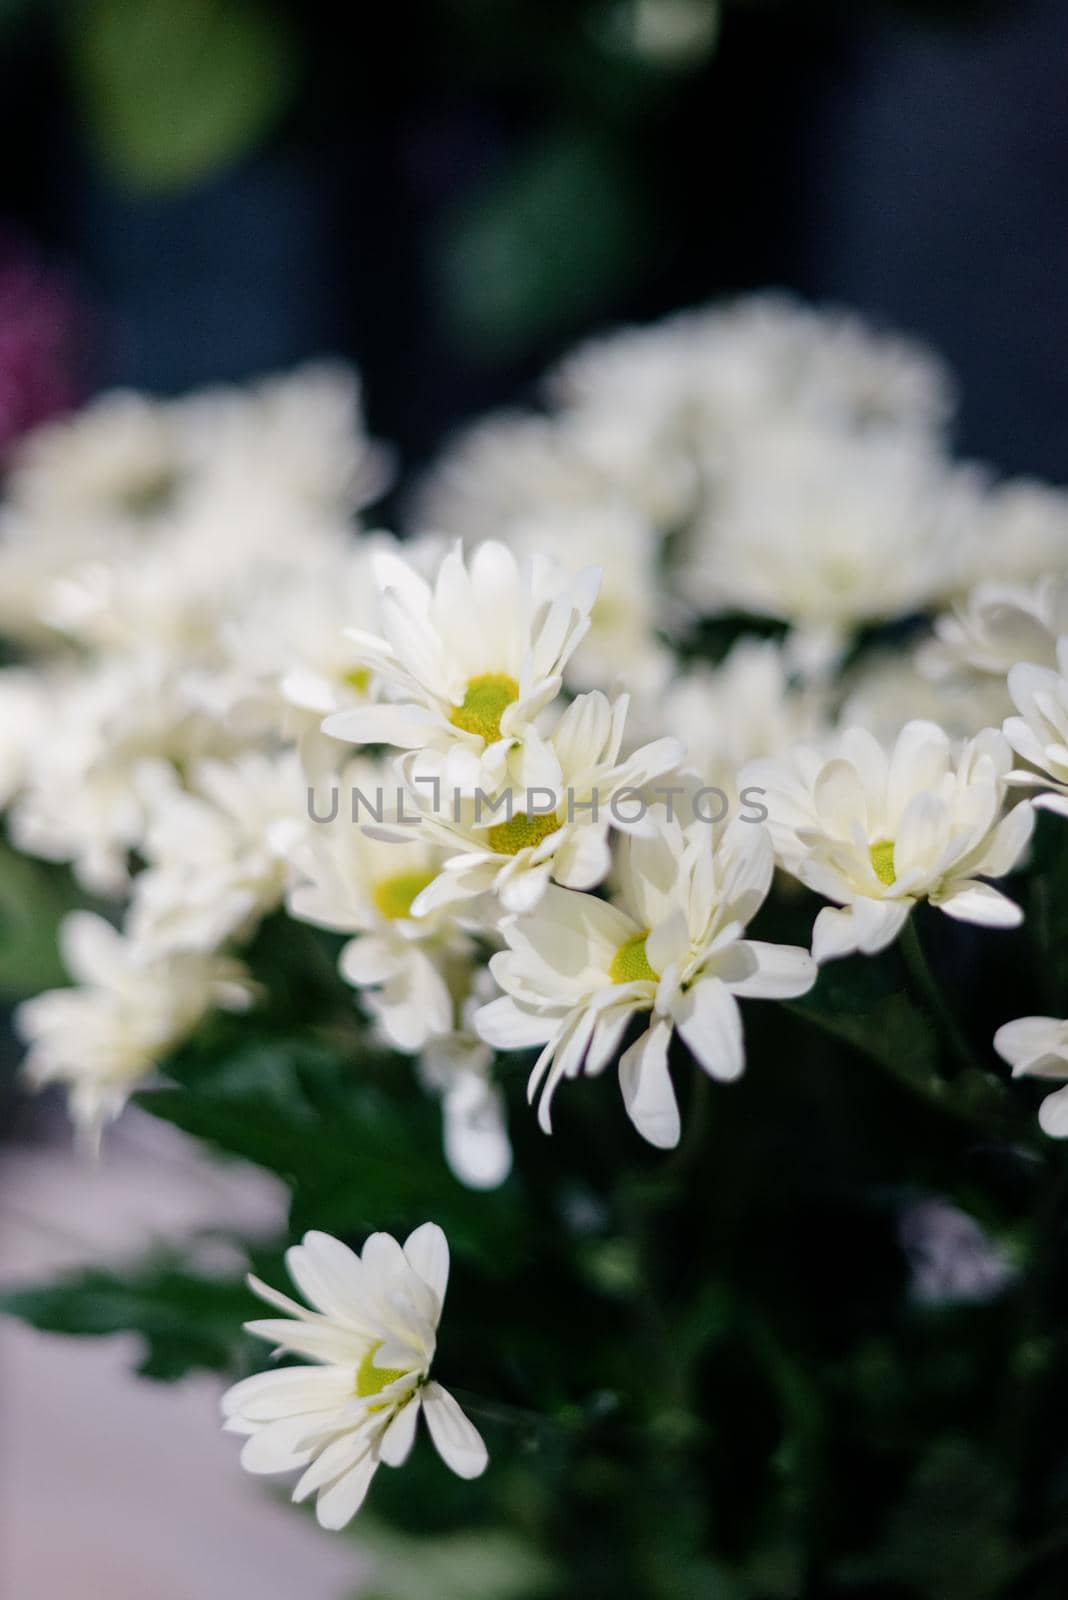 Close-up of a bouquet of white chrysanthemum flowers.white chrysanthemum flowers with space for text. garden chrysanthemum. floral wallpaper background